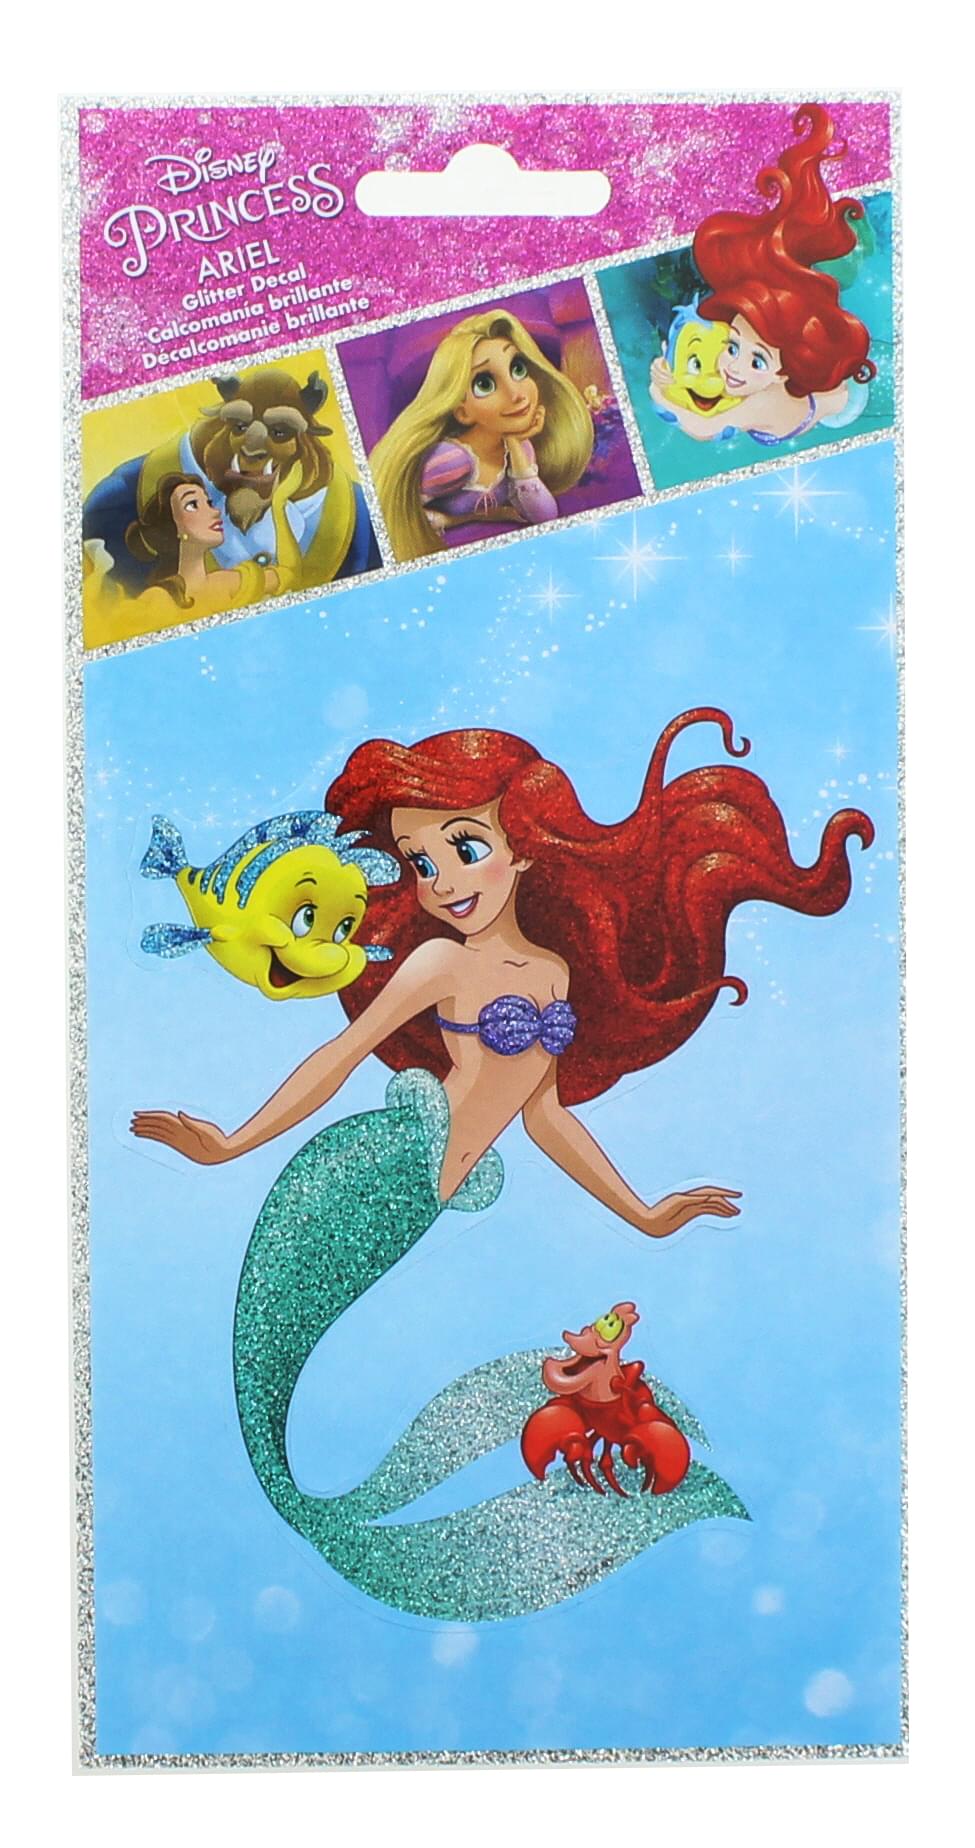 Disney Princess Ariel 4 x 8 Inch Glitter Decal